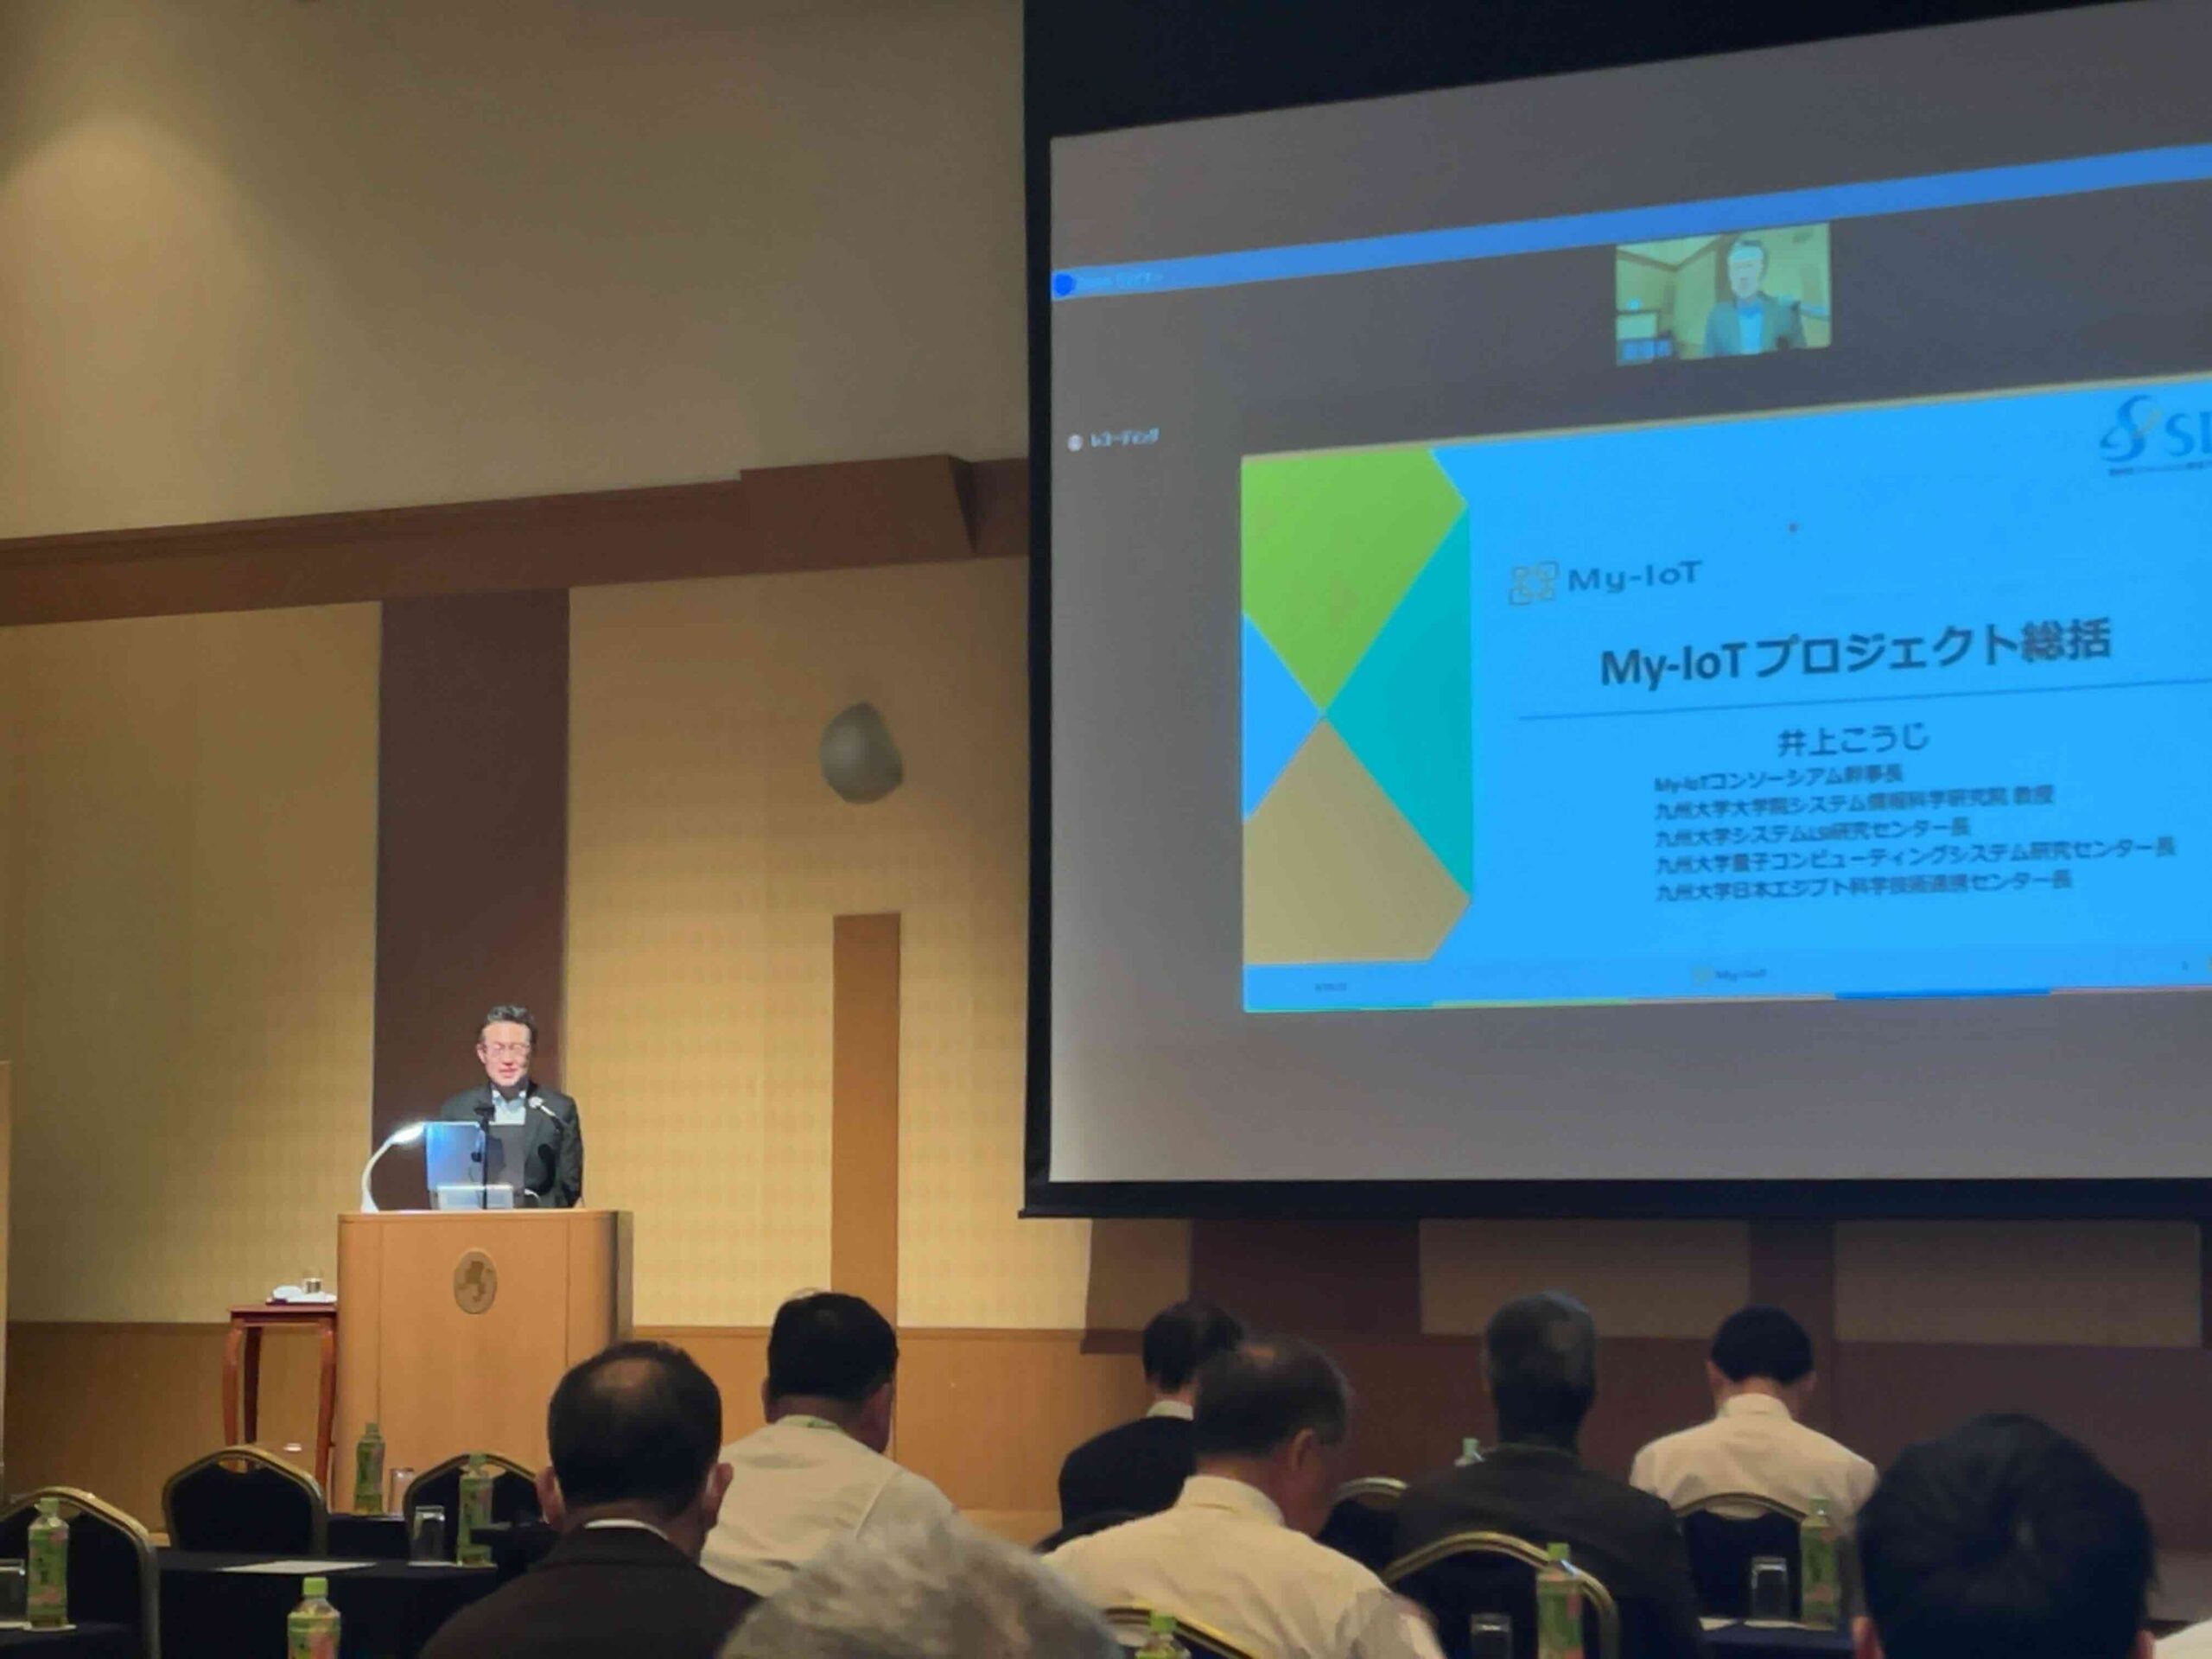 Koji gave a talk for IoT platform at the My-IoT symposium 2023.